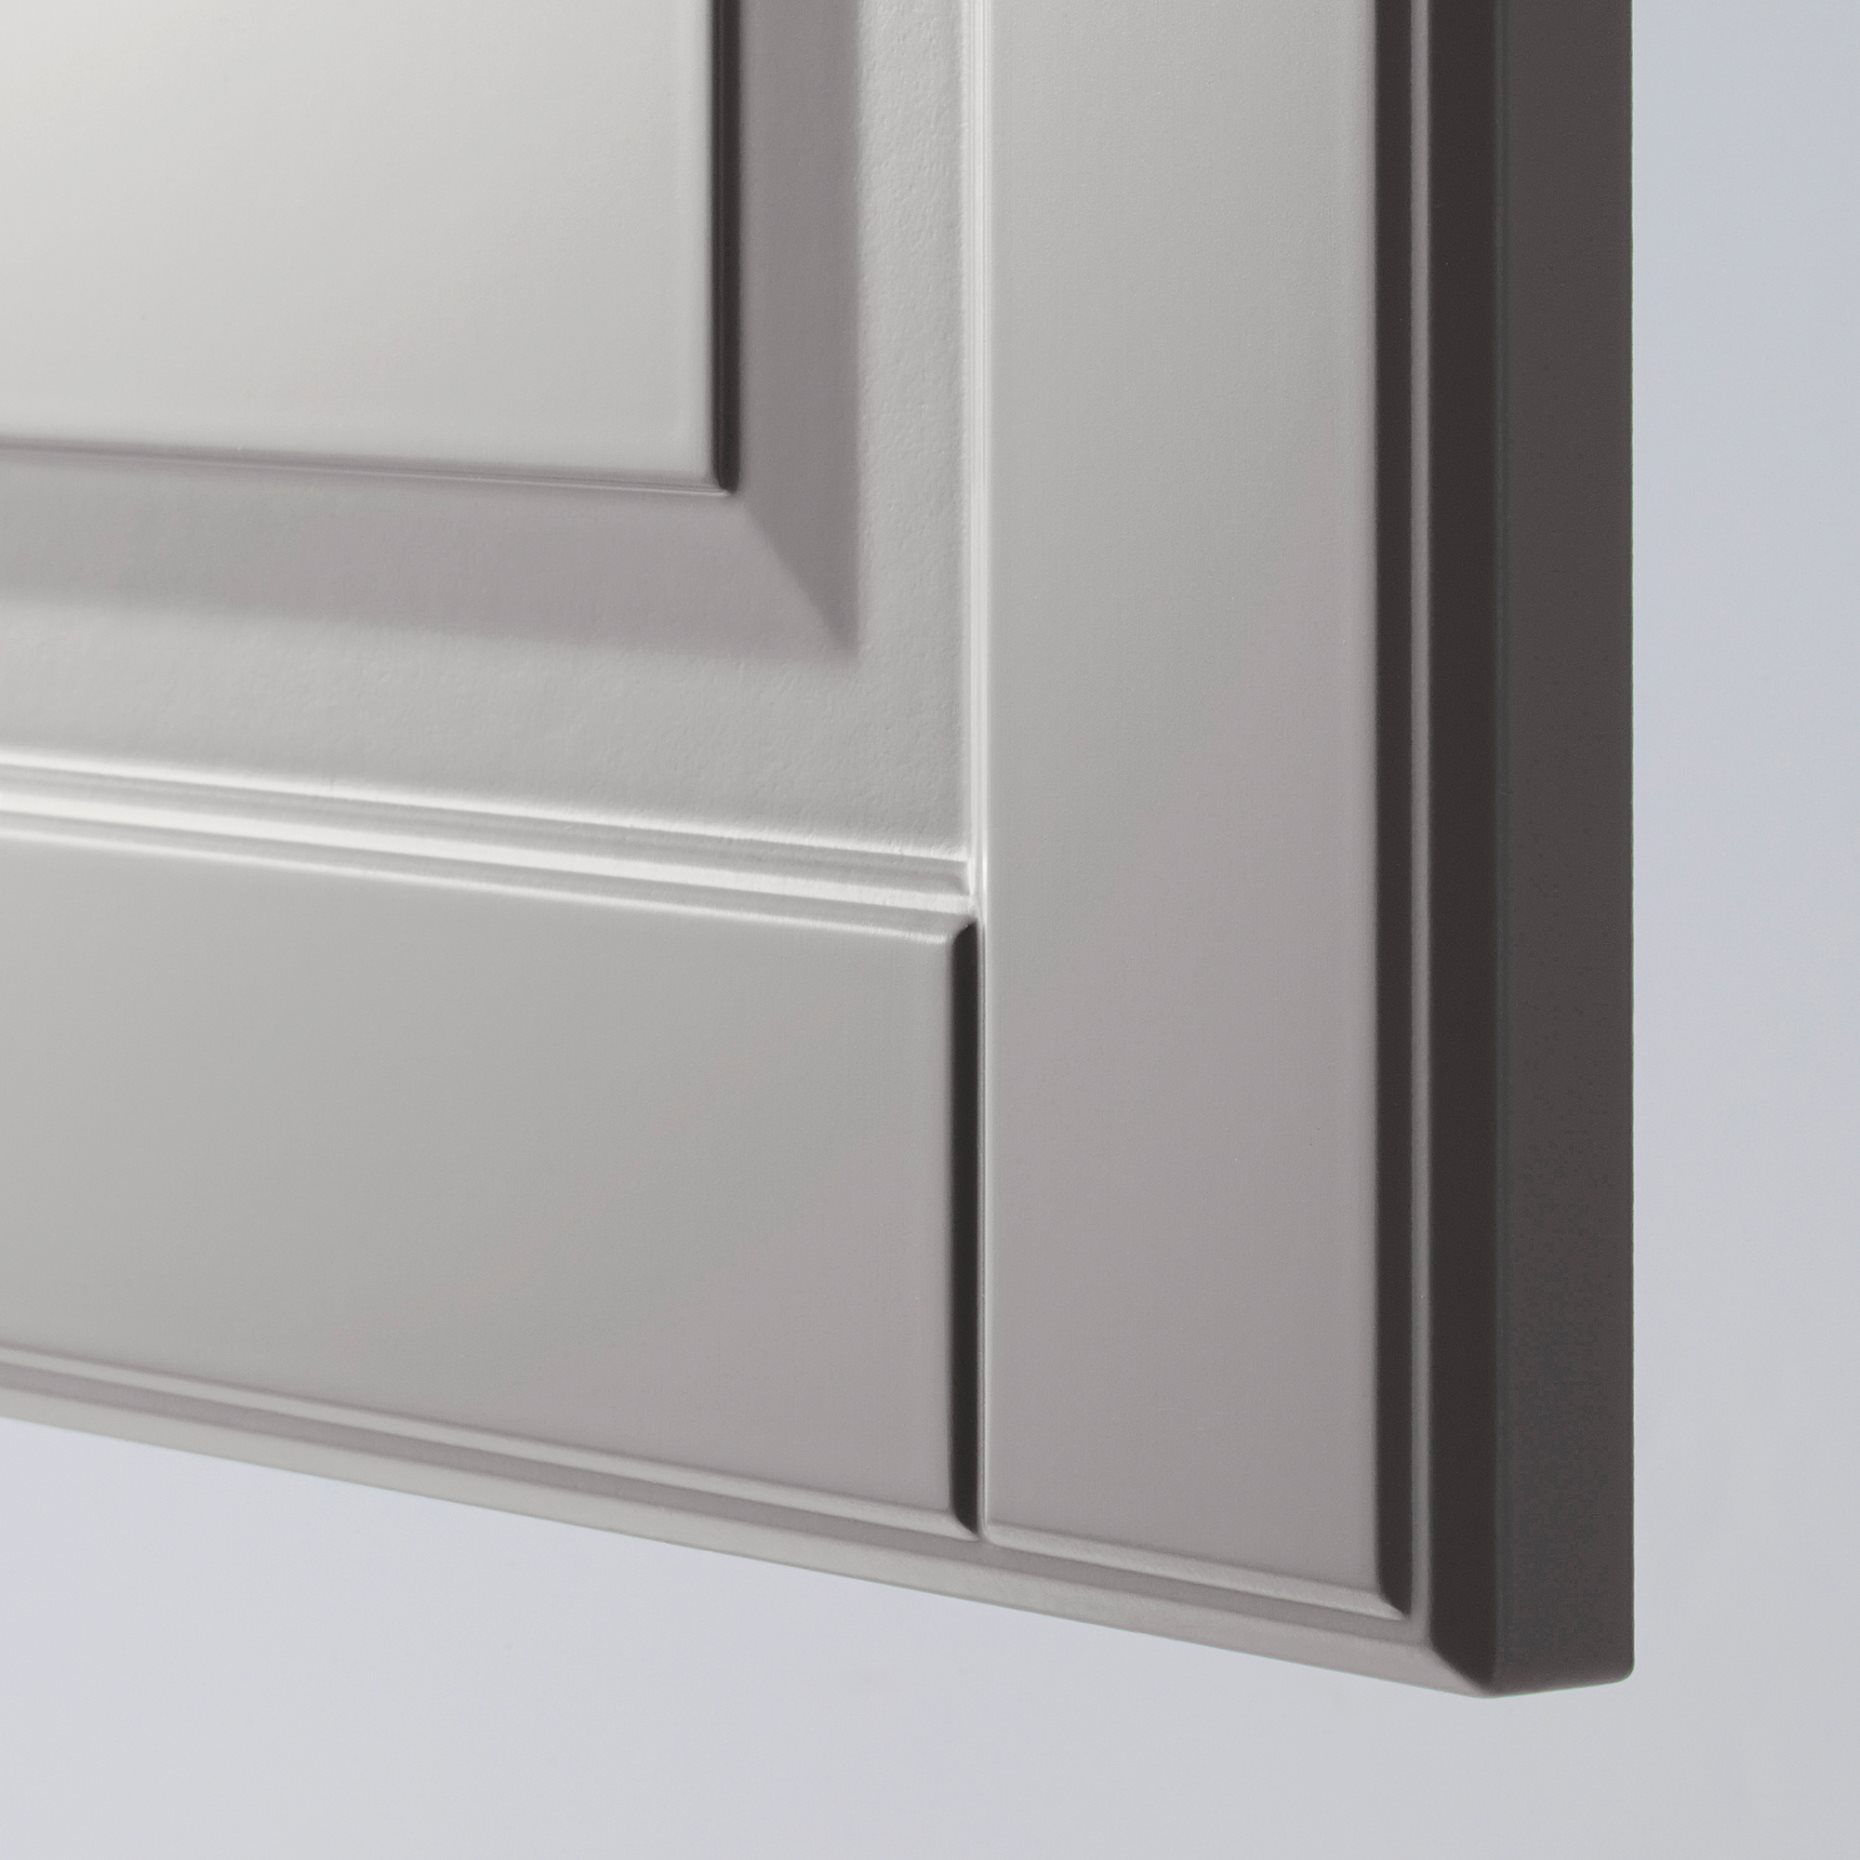 METOD, base cabinet for sink/2 doors, 80x60 cm, 894.666.08